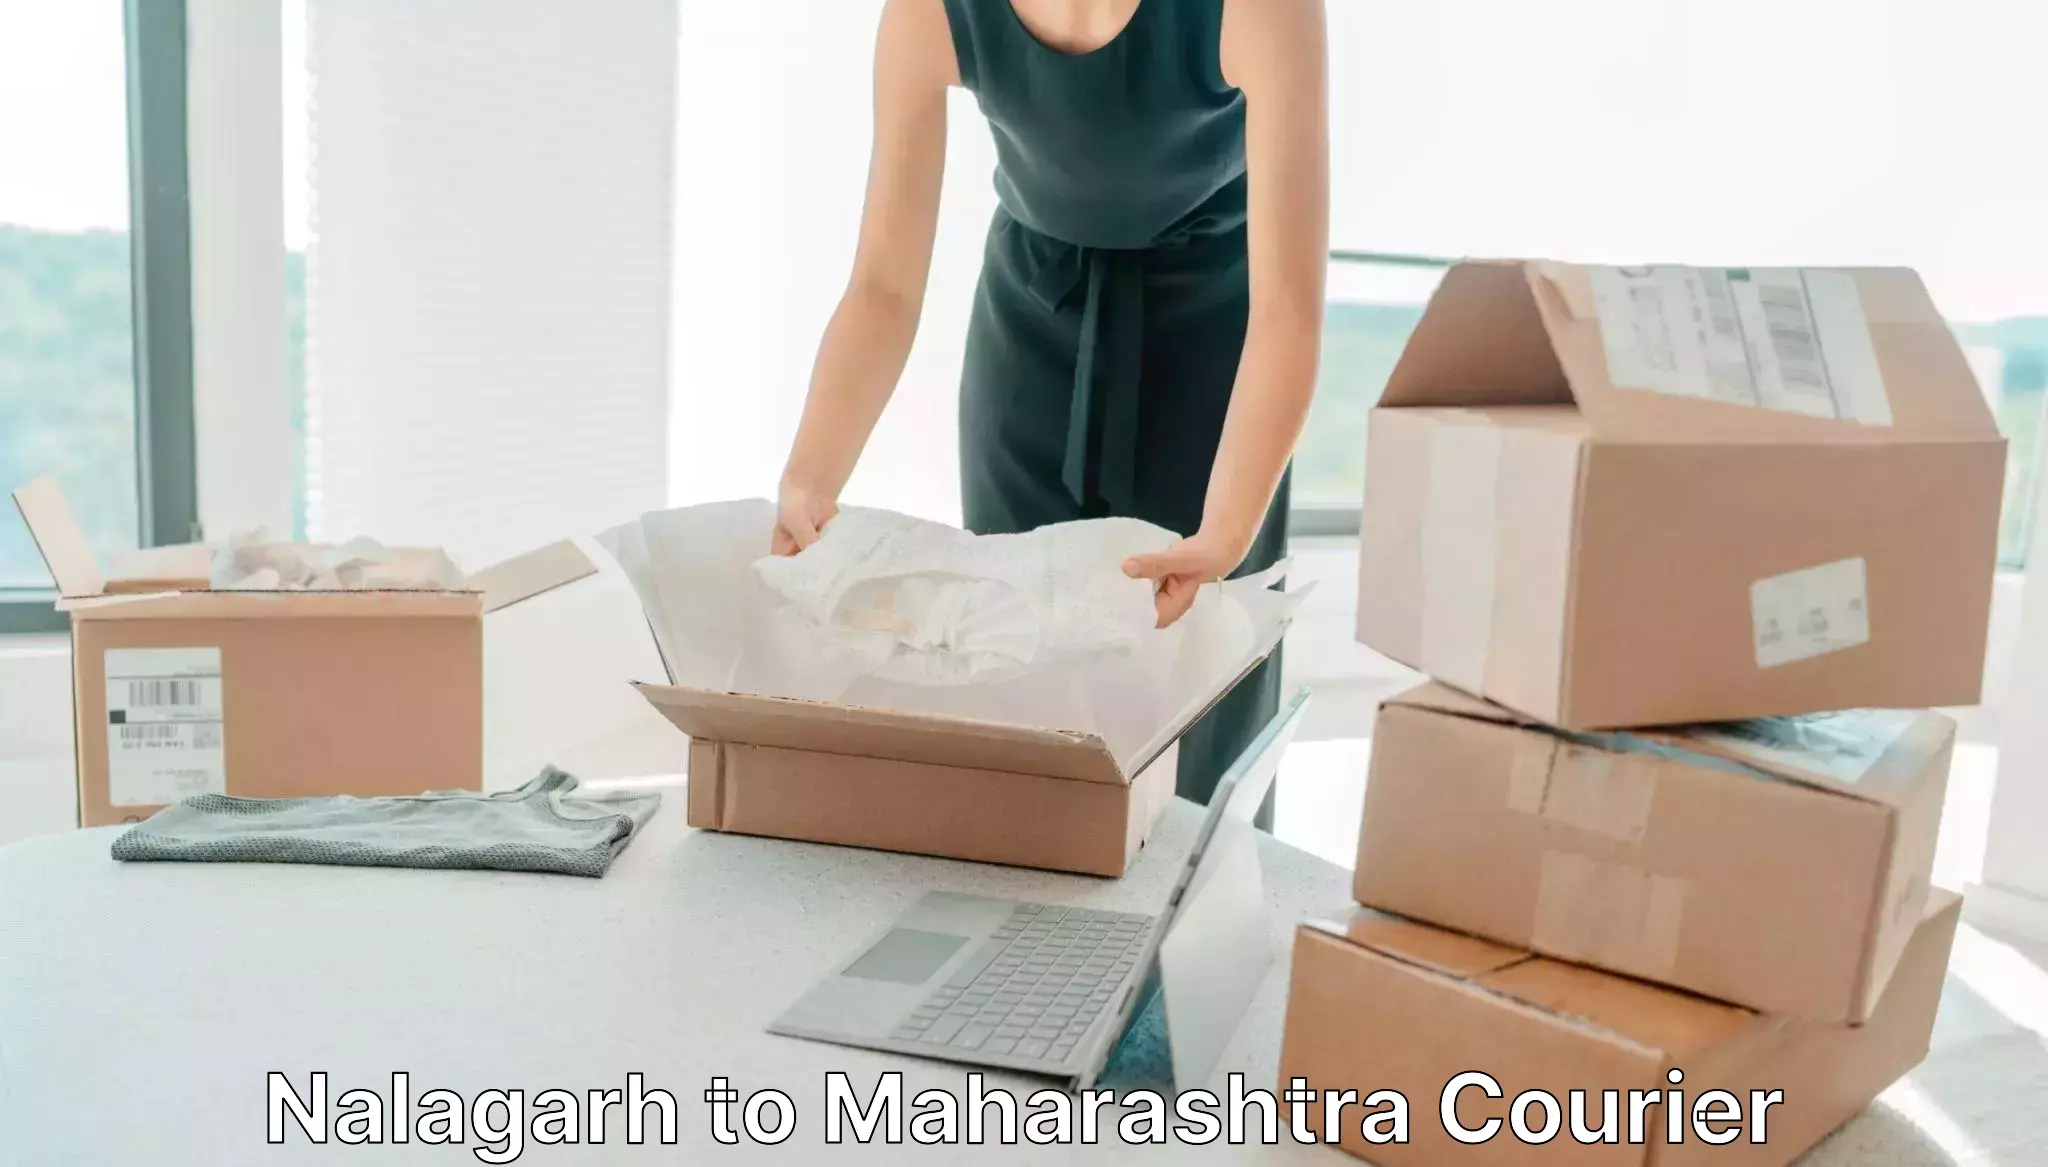 Courier service booking Nalagarh to Mumbai Port